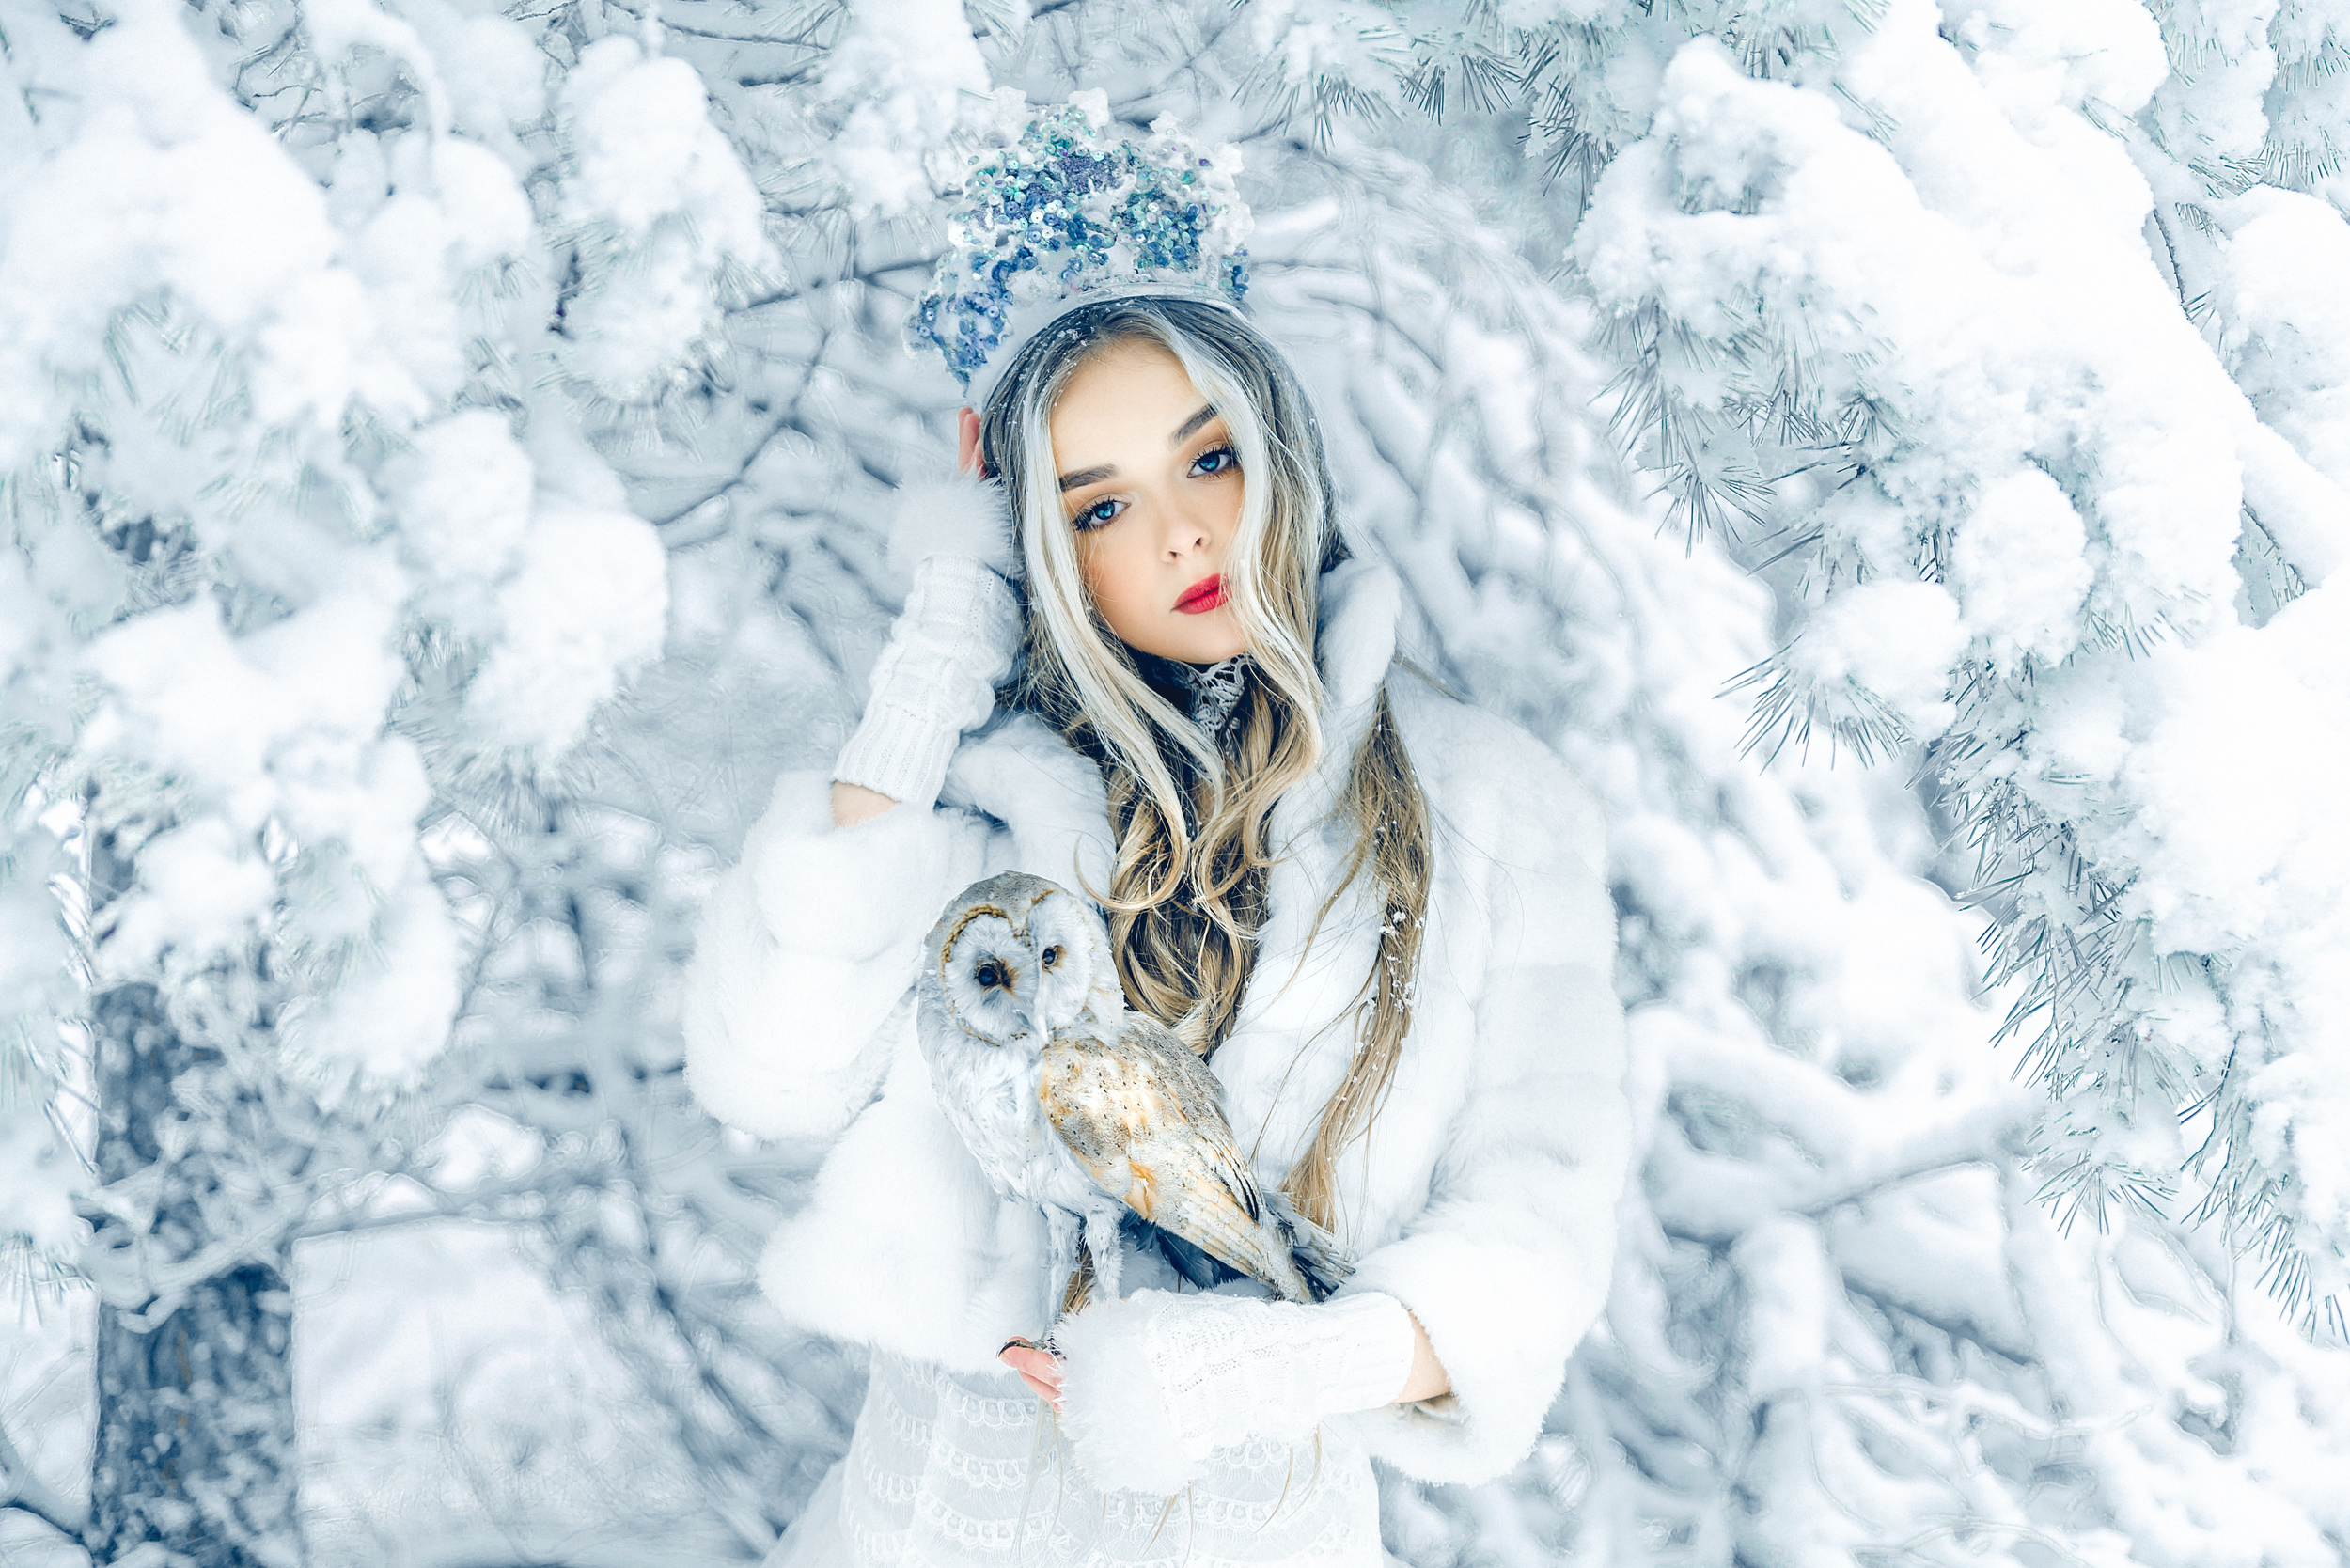 Девушка под снегом. Девушка в снегу. Снежная девушка. Девушка зима снег. Красивая девушка зима.